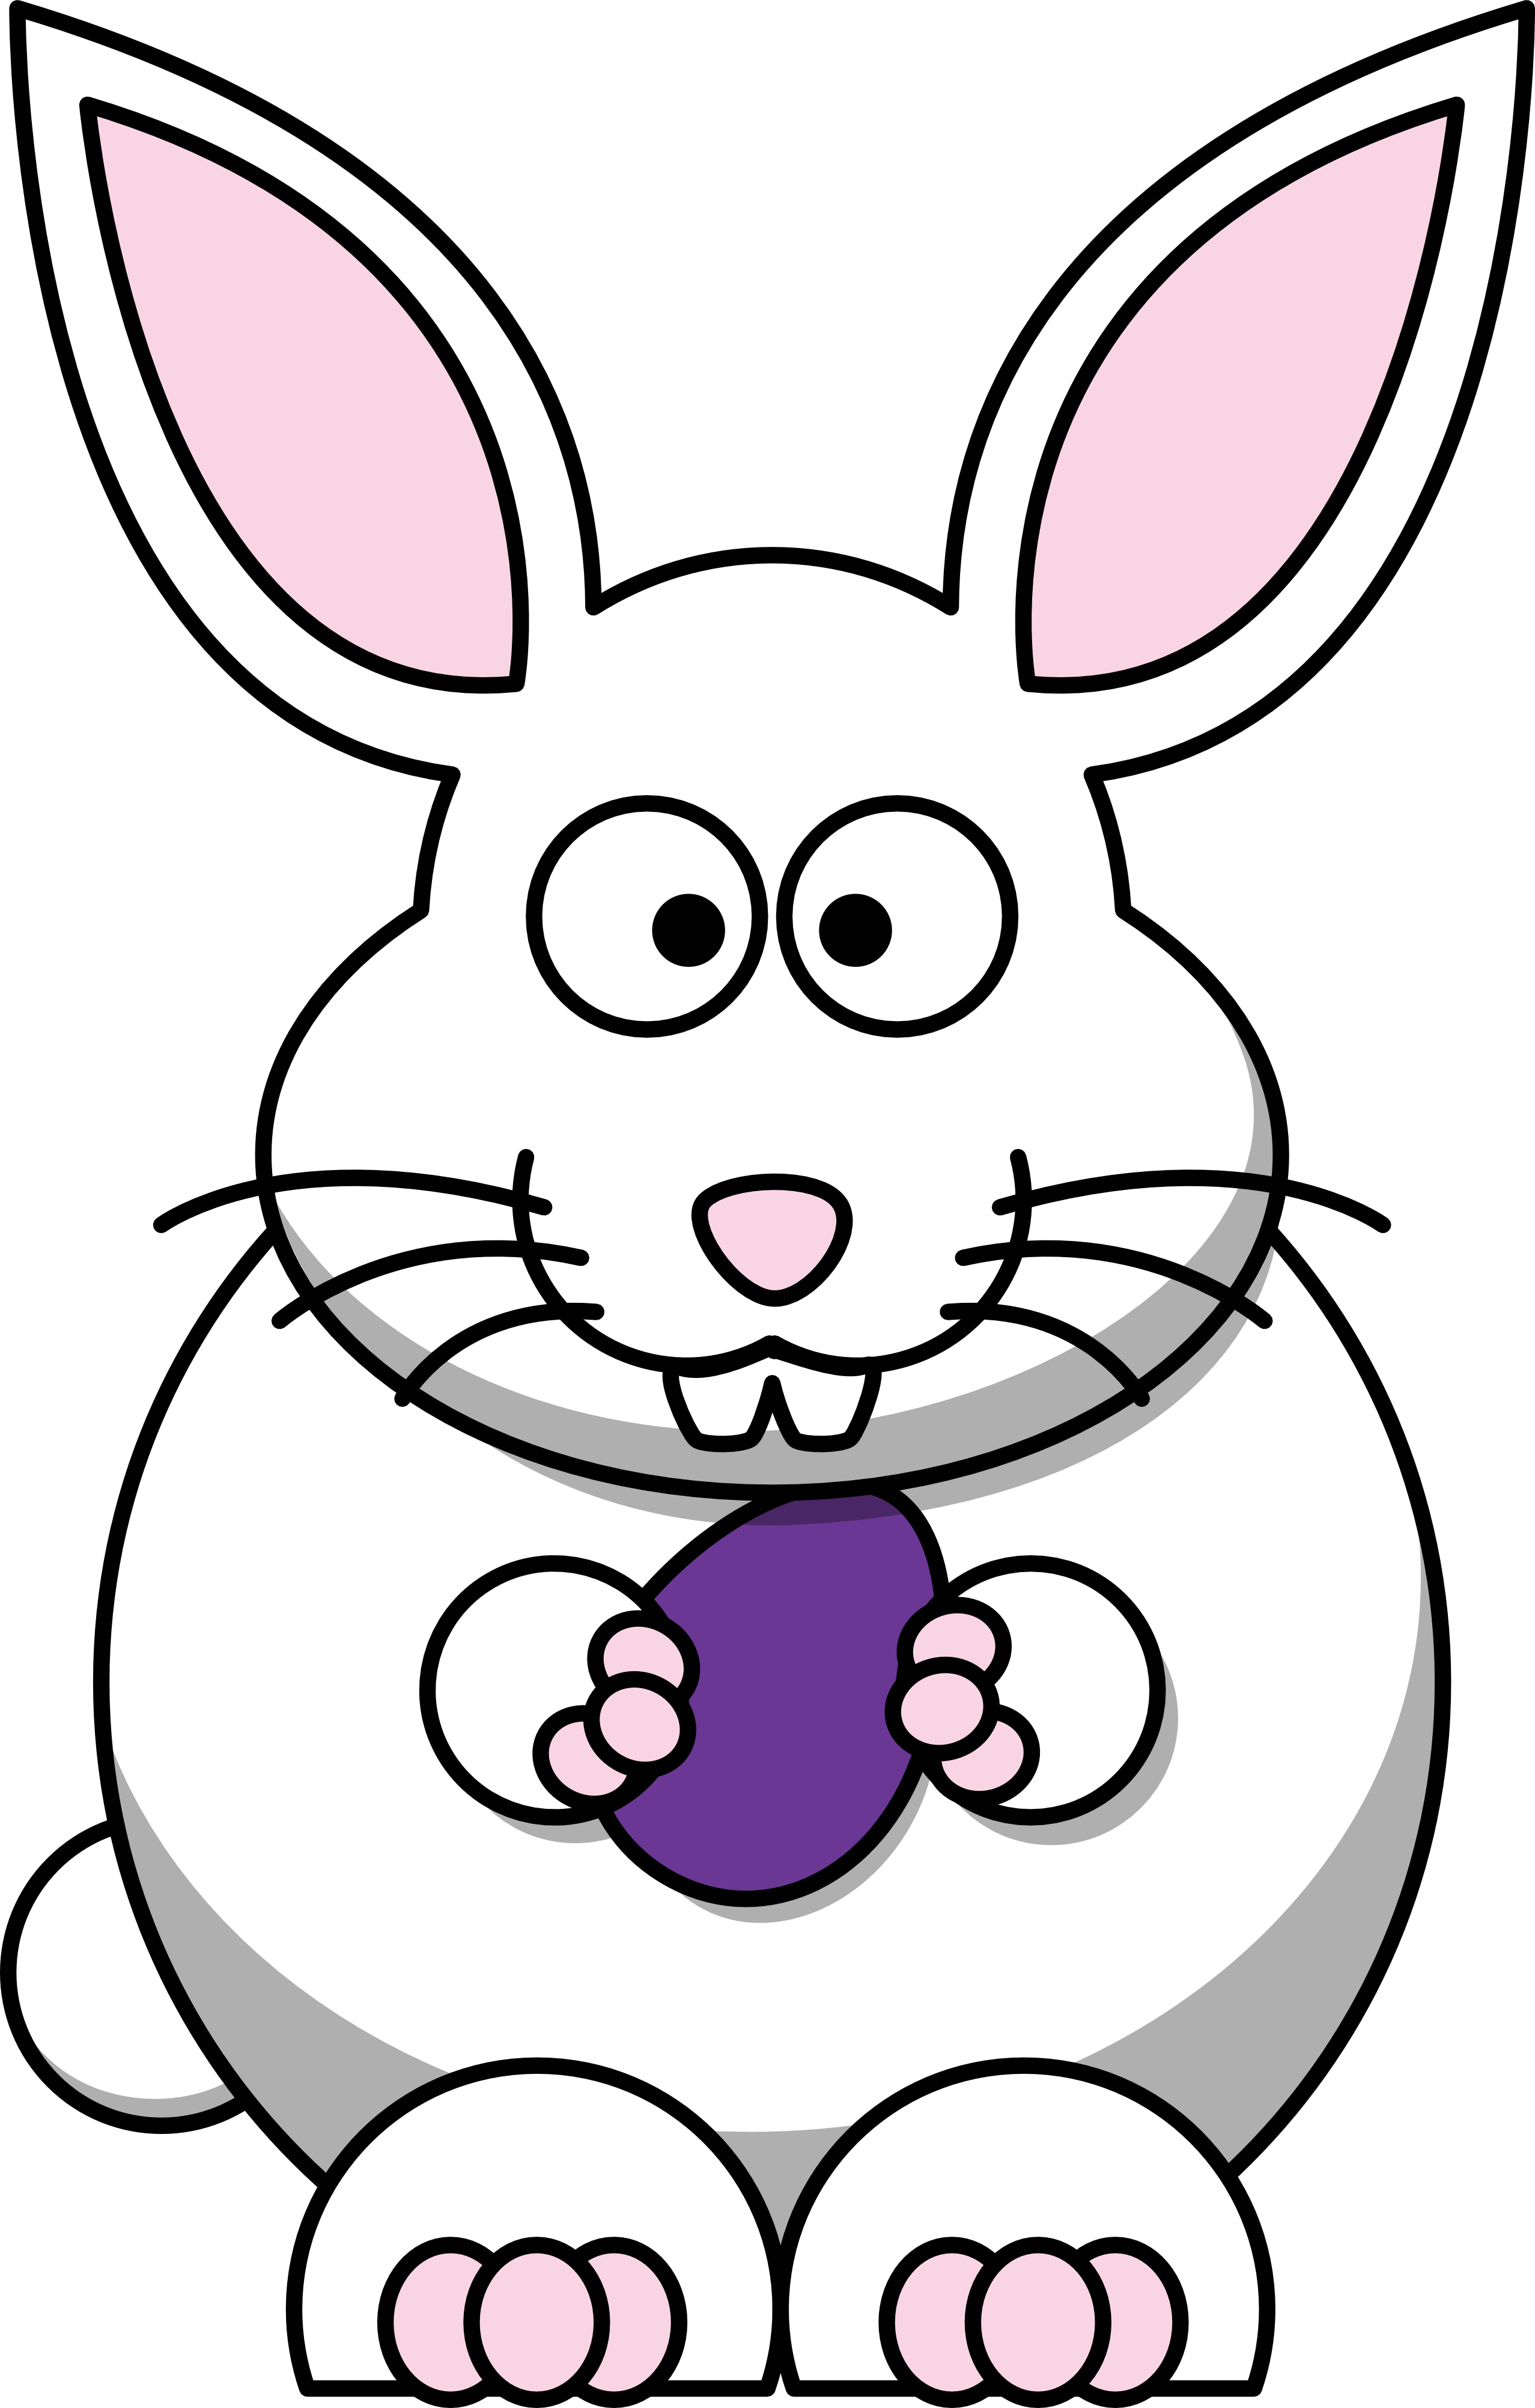 PNG Rabbit Cartoon - 65142